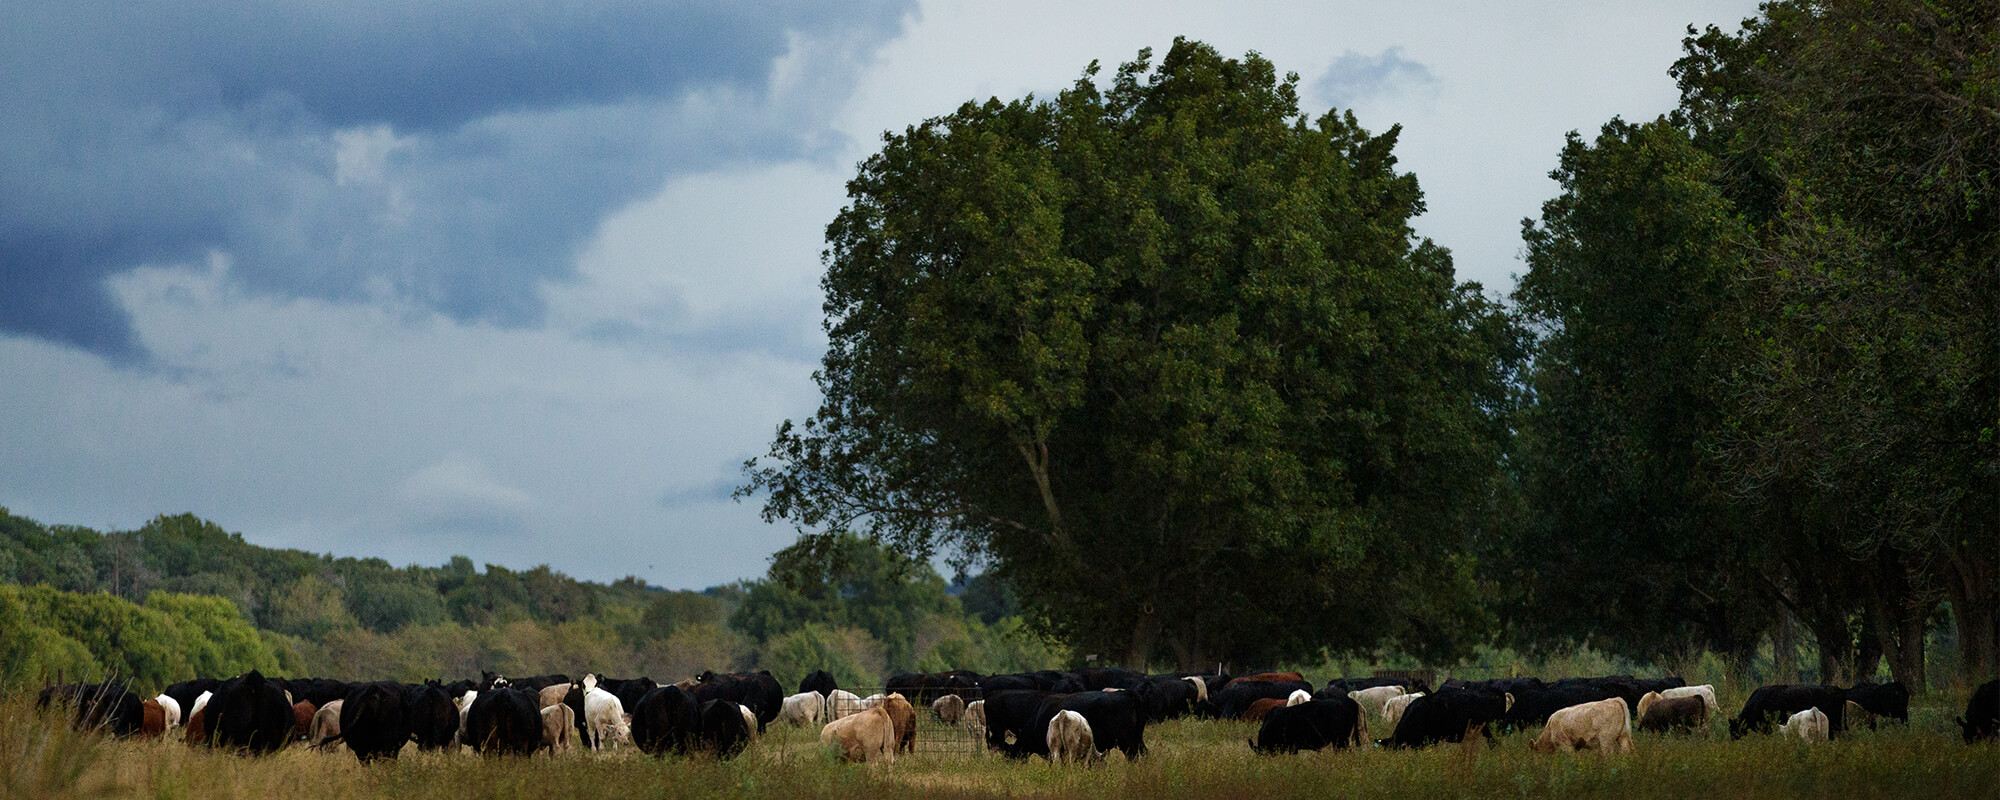 Cattle grazing in a pecan grove under a cloudy sky